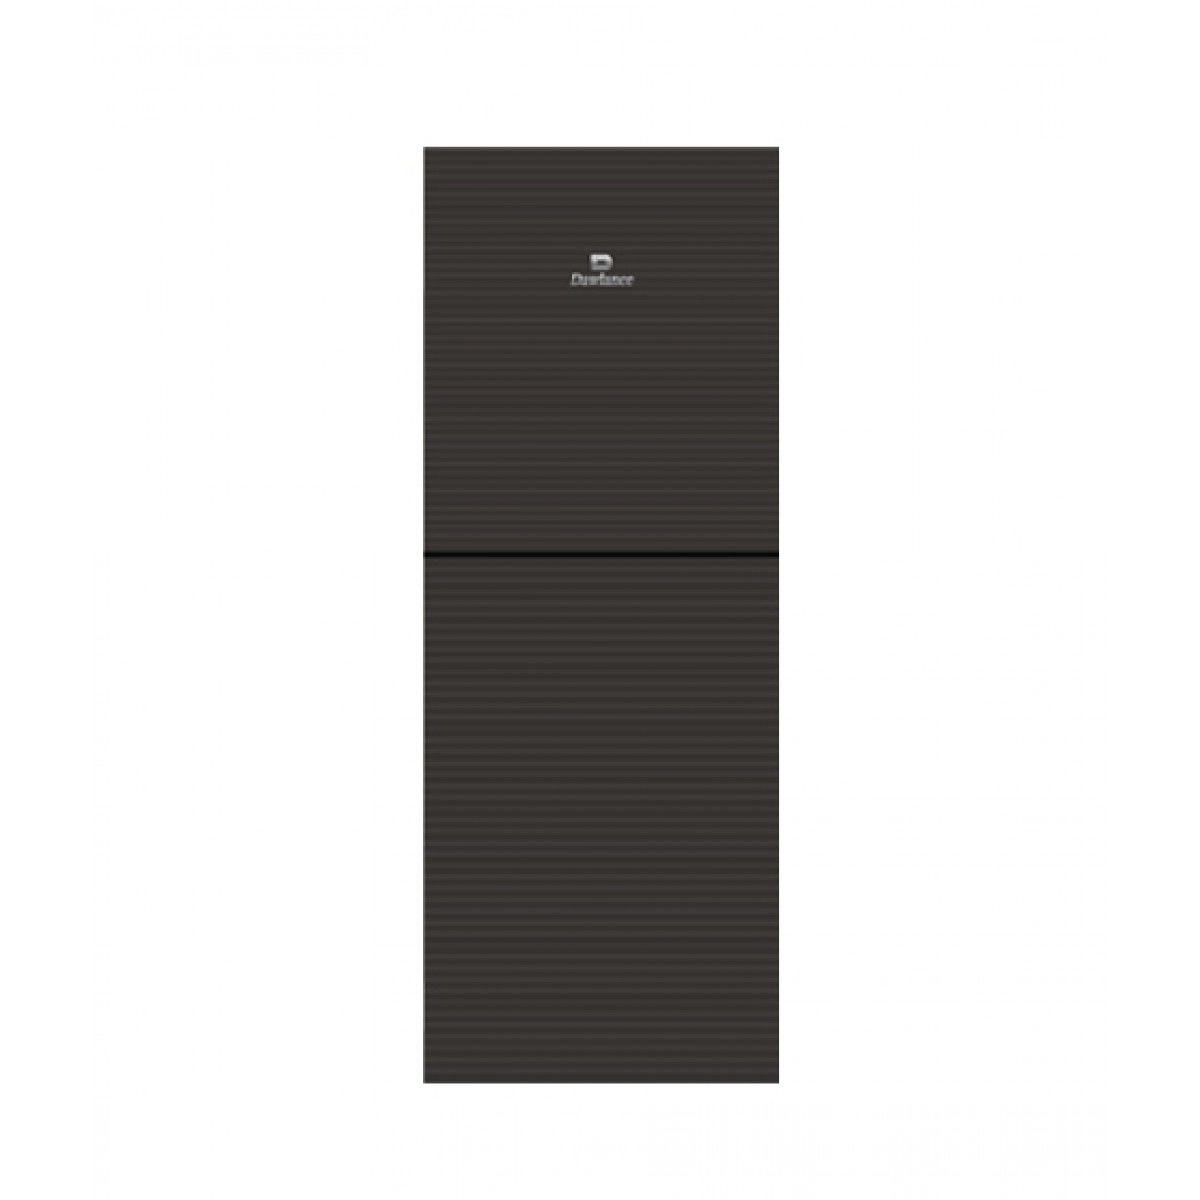 Dawlance Refrigerator 9 Cu ft Black (9150LF)